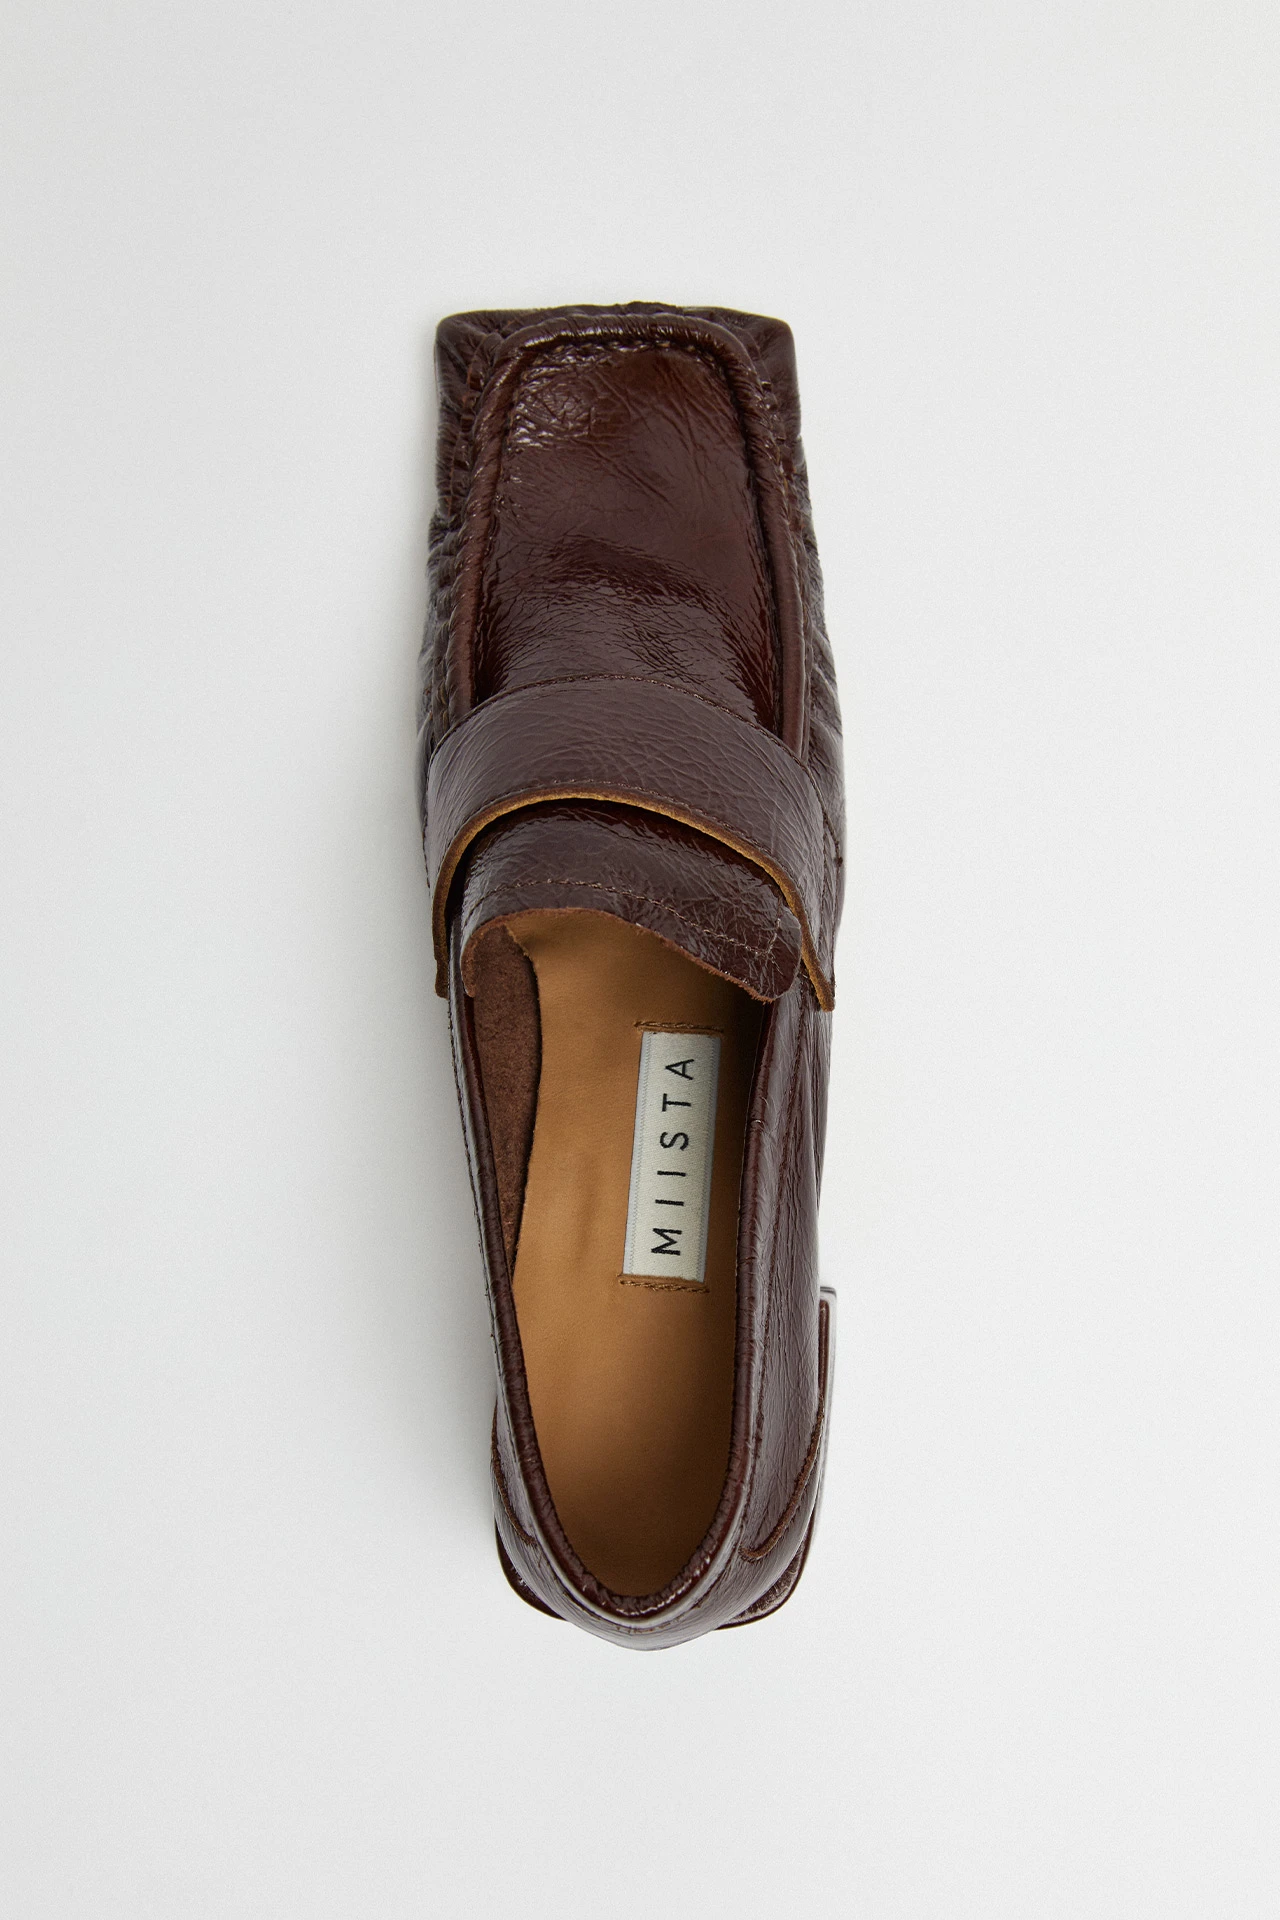 Miista-serena-brown-patent-loafers-03